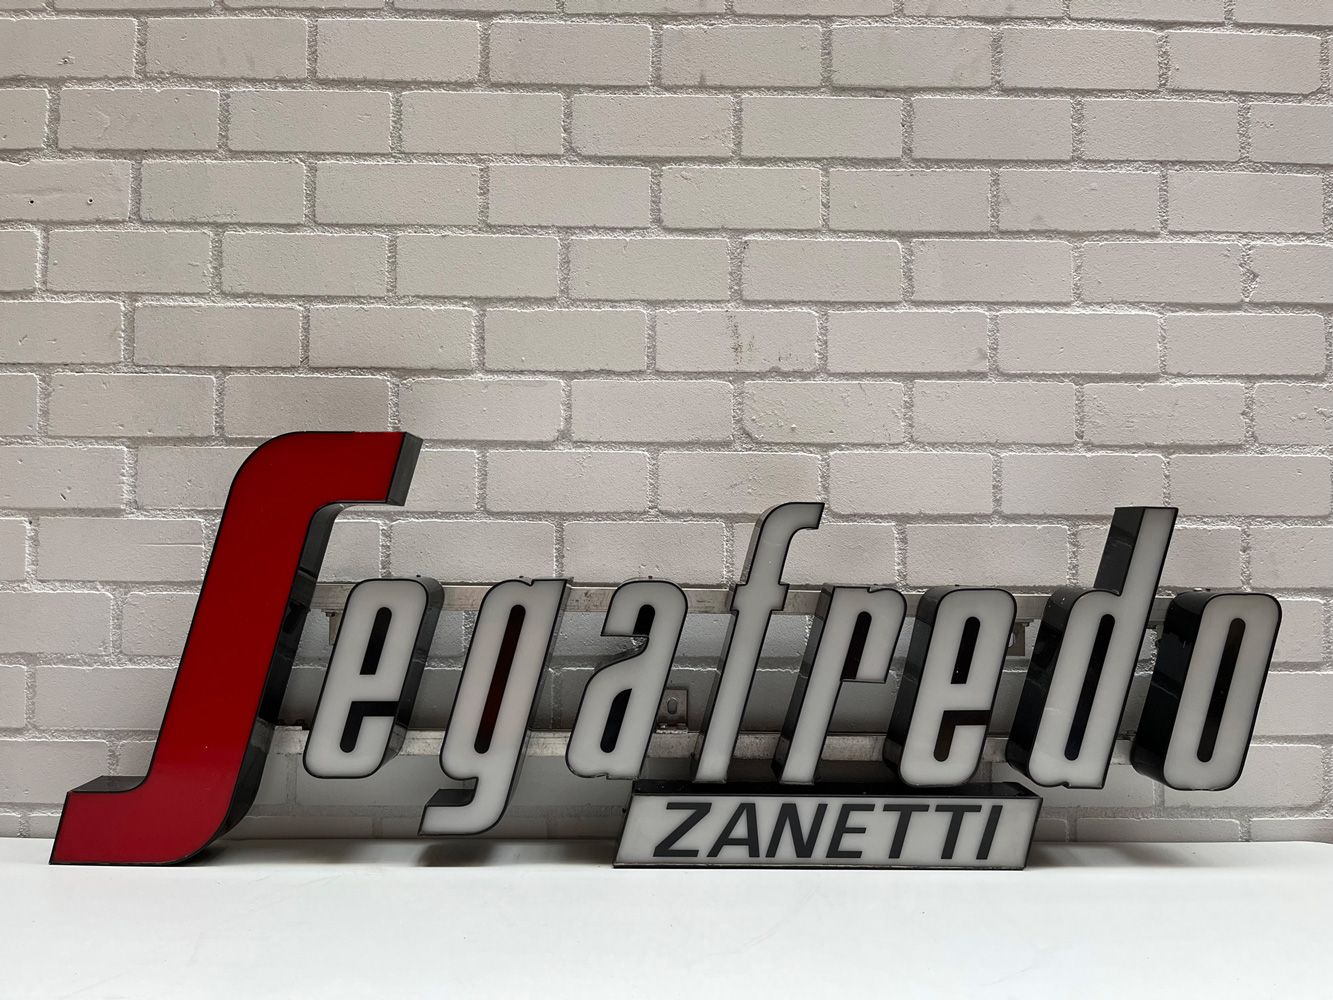 Segafredo Zanetti Front Lit Channel Letters Sign Segafredo Zanetti (producteurs &hellip;